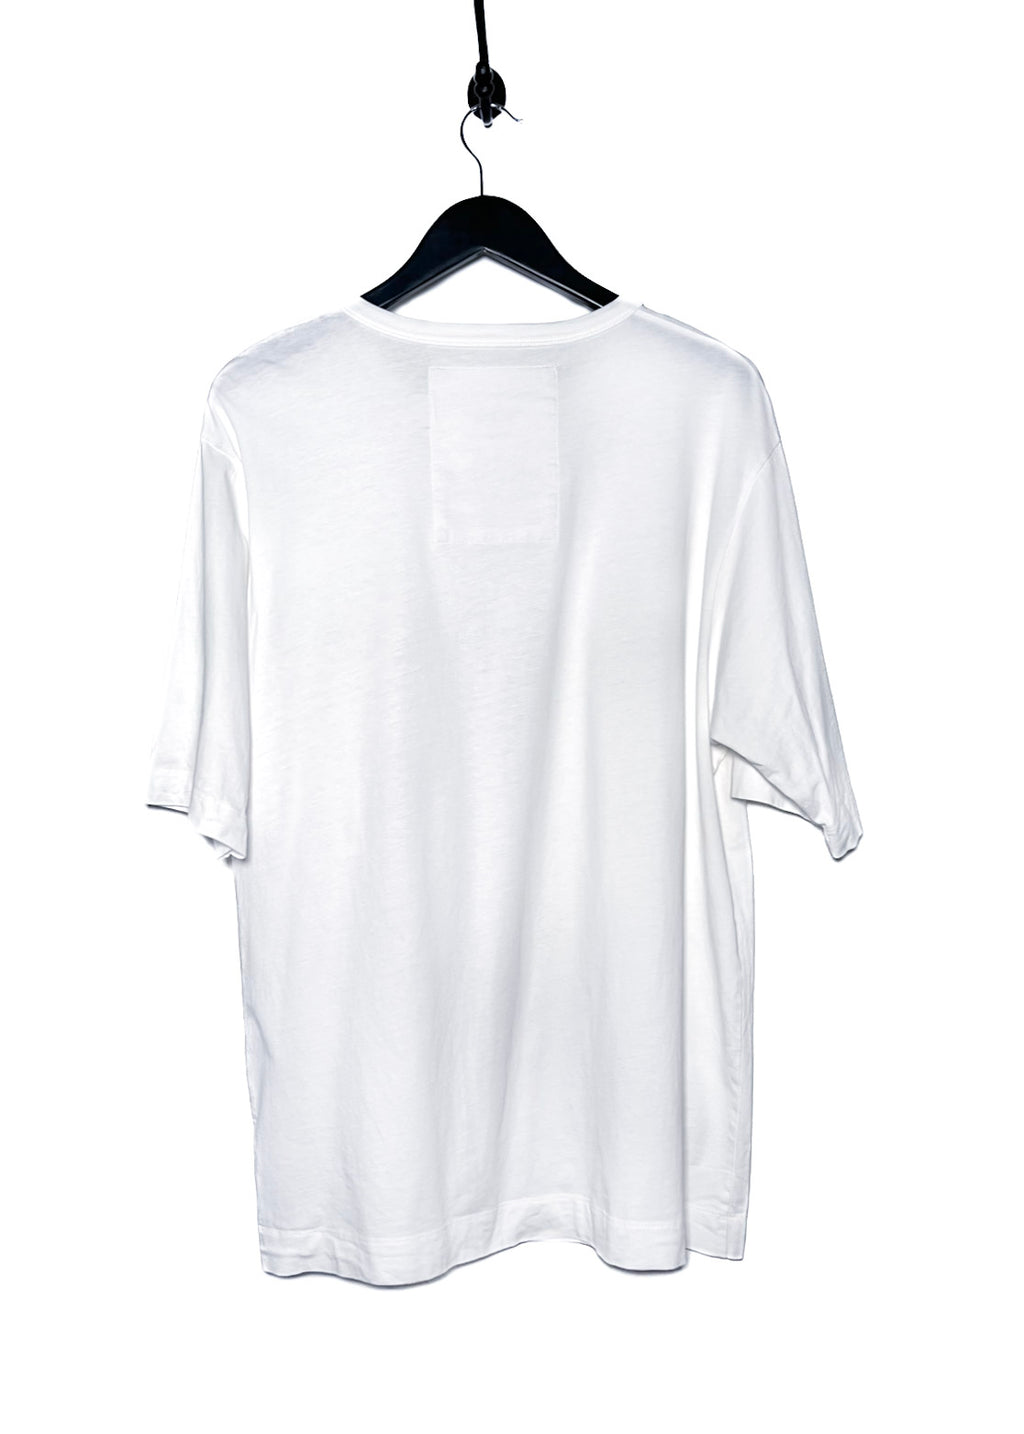 T-shirt blanc appliqué "New Noir 2" Dries Van Noten X Mika Ninagawa